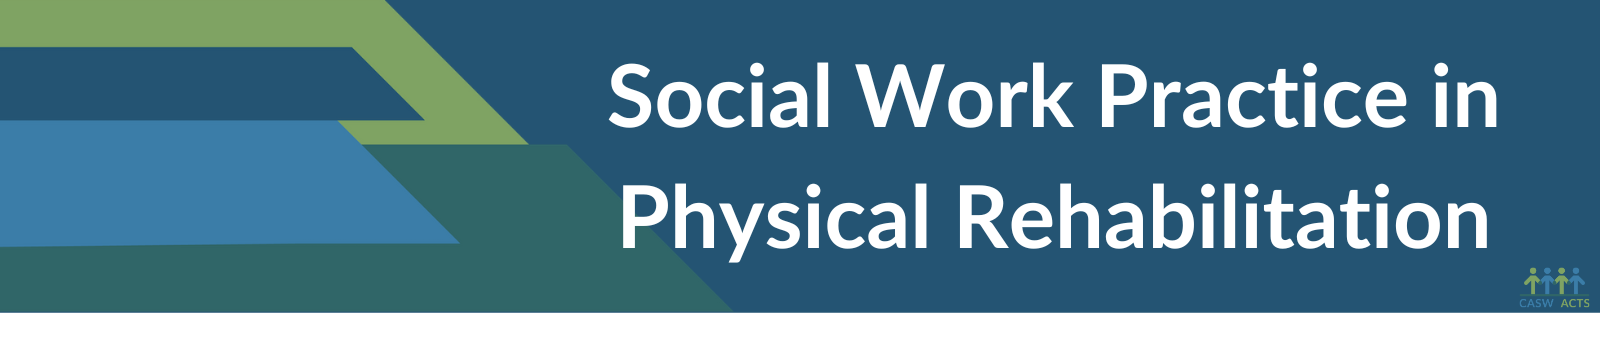 Social Work Practice in Physical Rehabilitation | Canadian Association ...